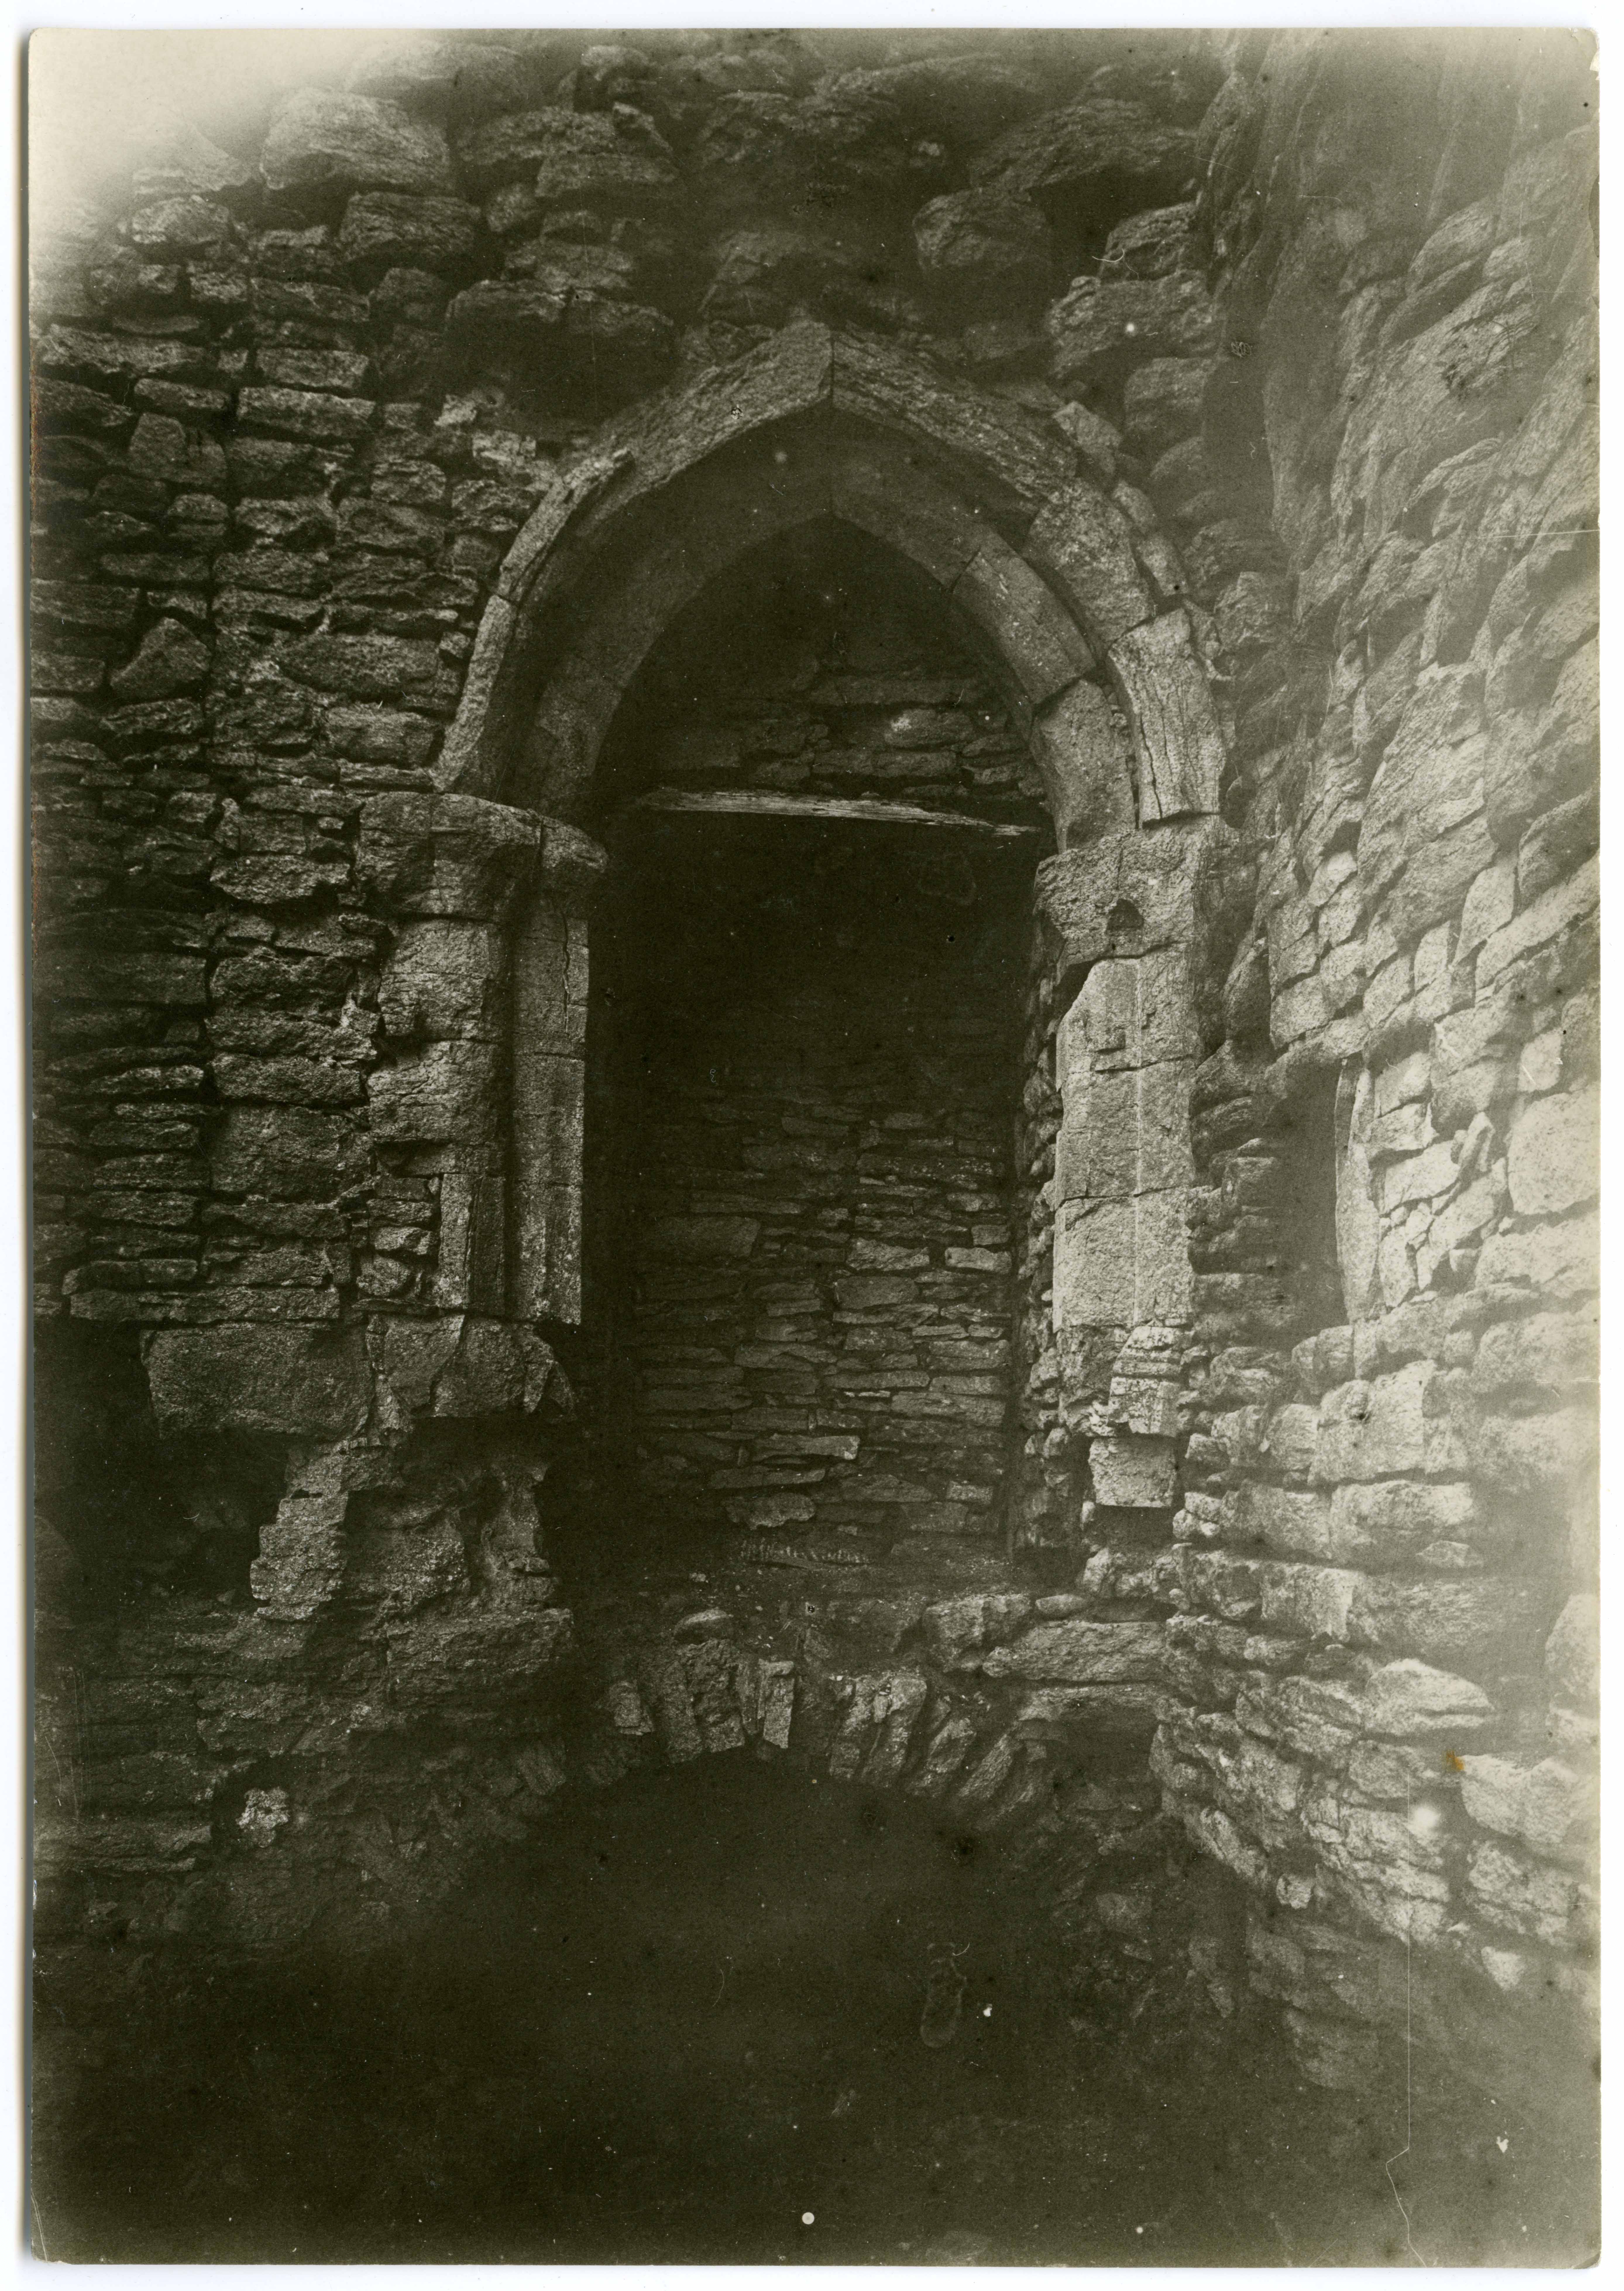 Padise monastery, enclosed raidportal